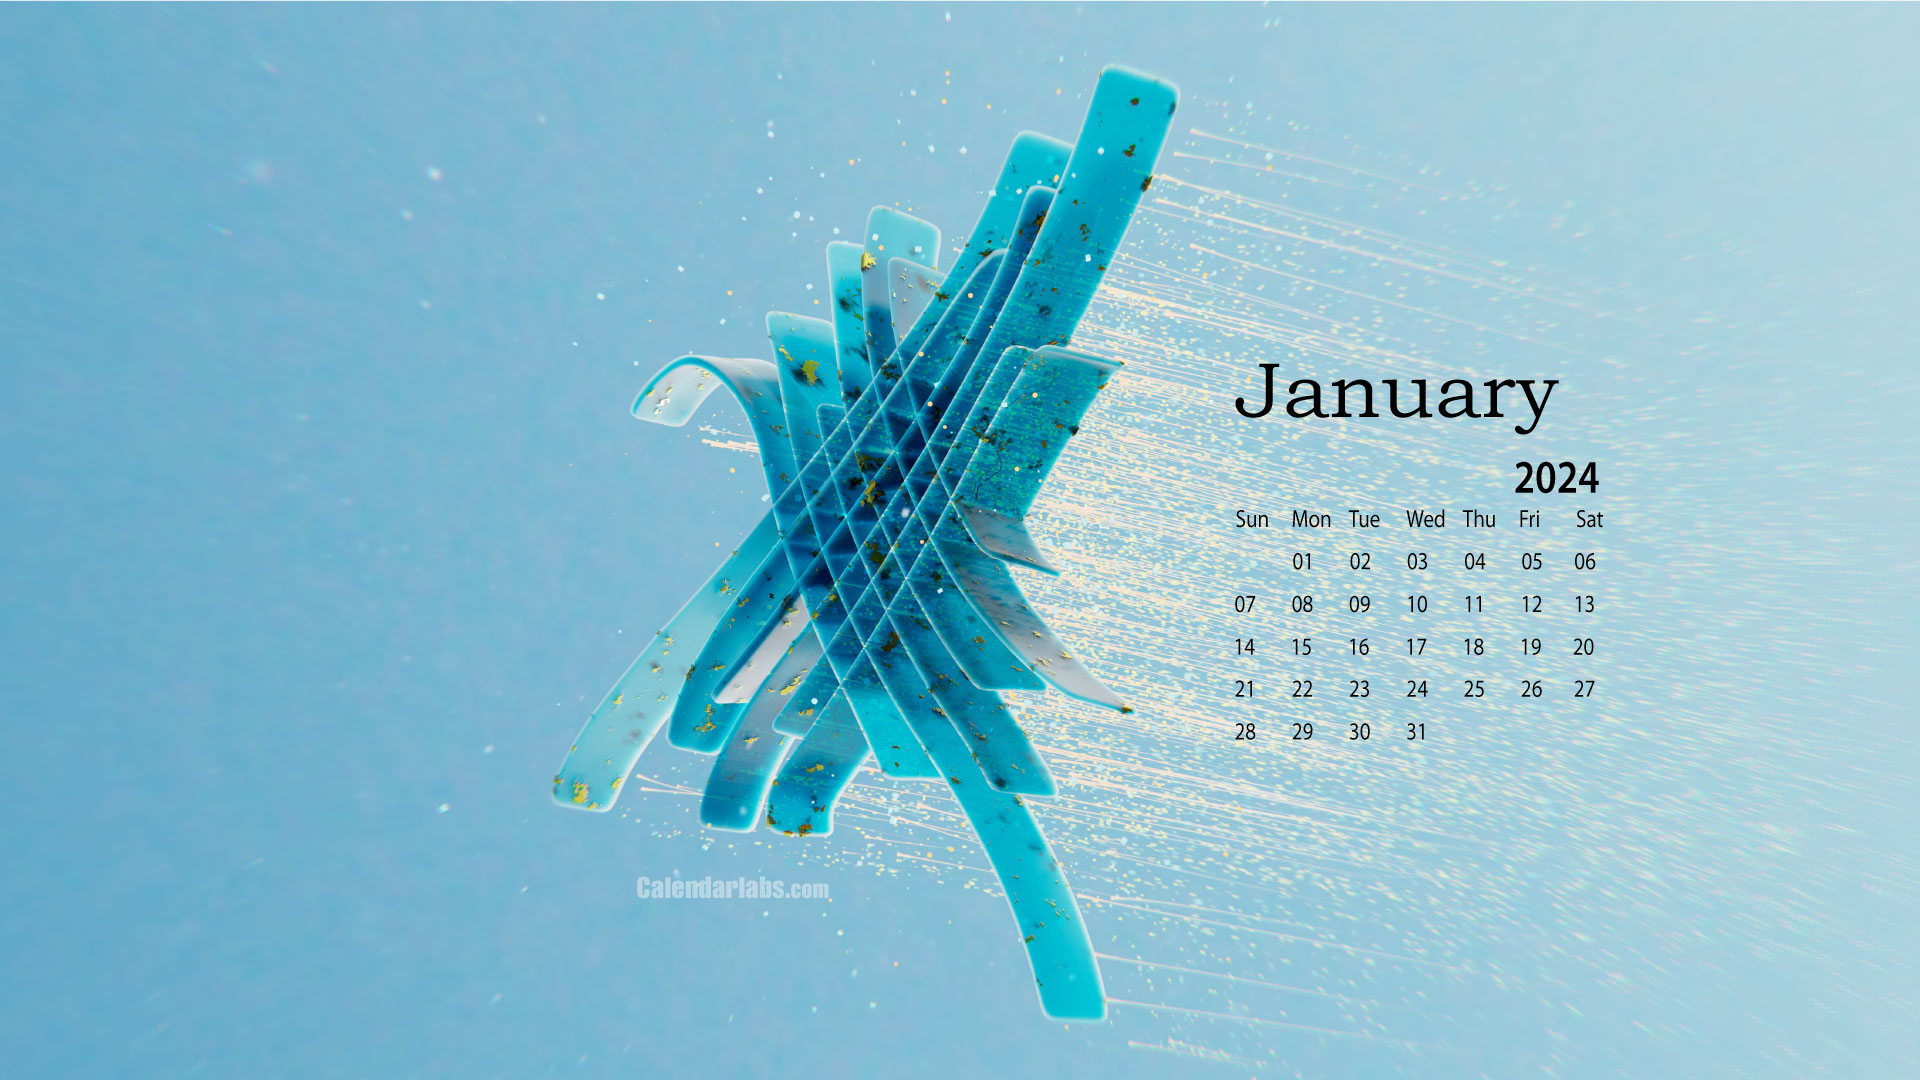 January 2024 Desktop Wallpaper Calendar - Calendarlabs | Printable Calendar 2024 Calendarlabs